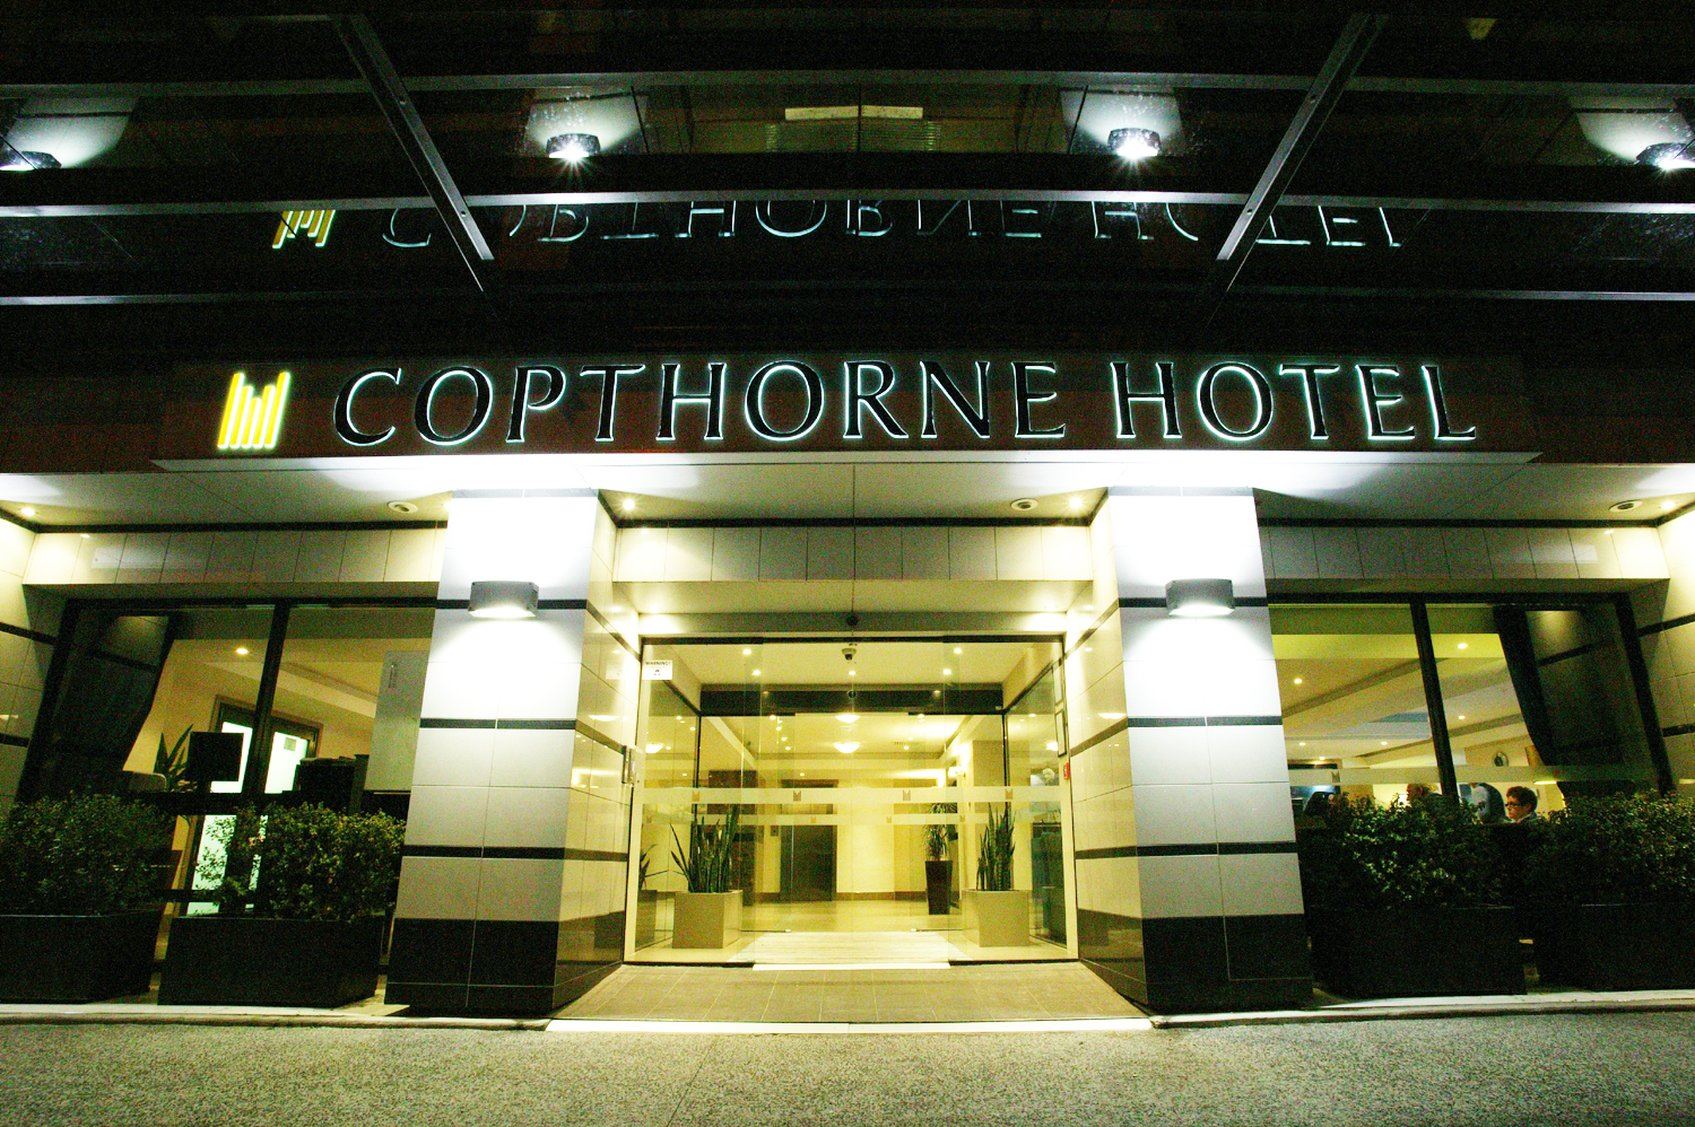 Copthorne Hotel Welllington Oriental Bay - 2